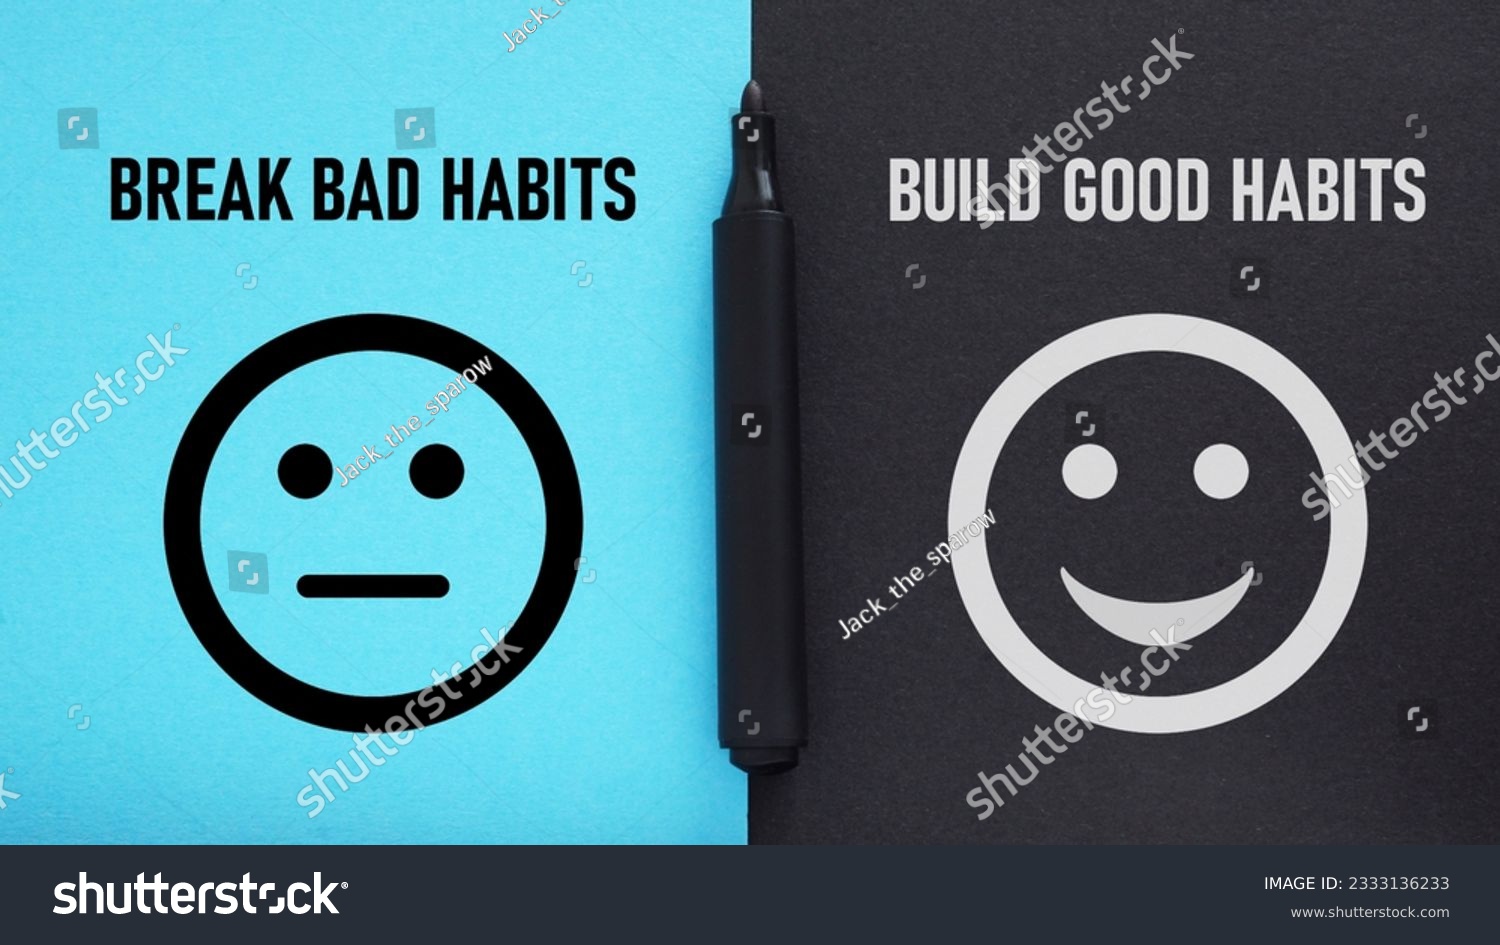 Break bad habits, build good habits - motivational phrase is shown using a text #2333136233